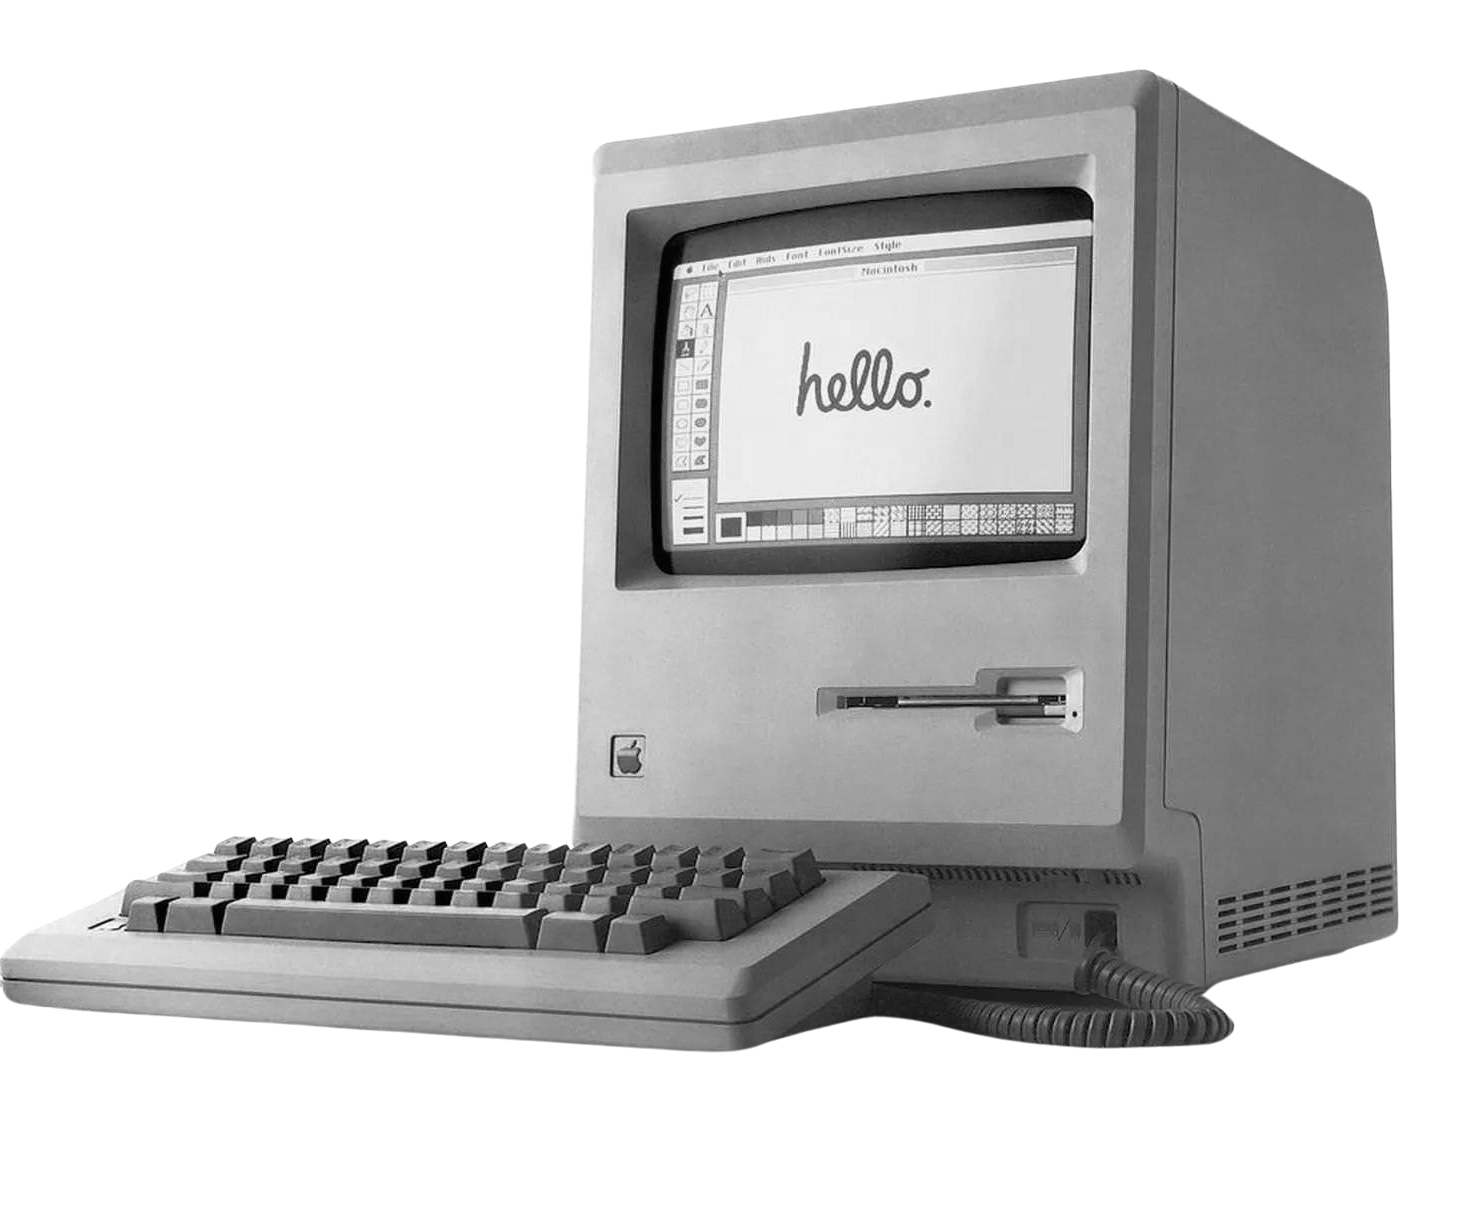 A Apple Computer Macintosh